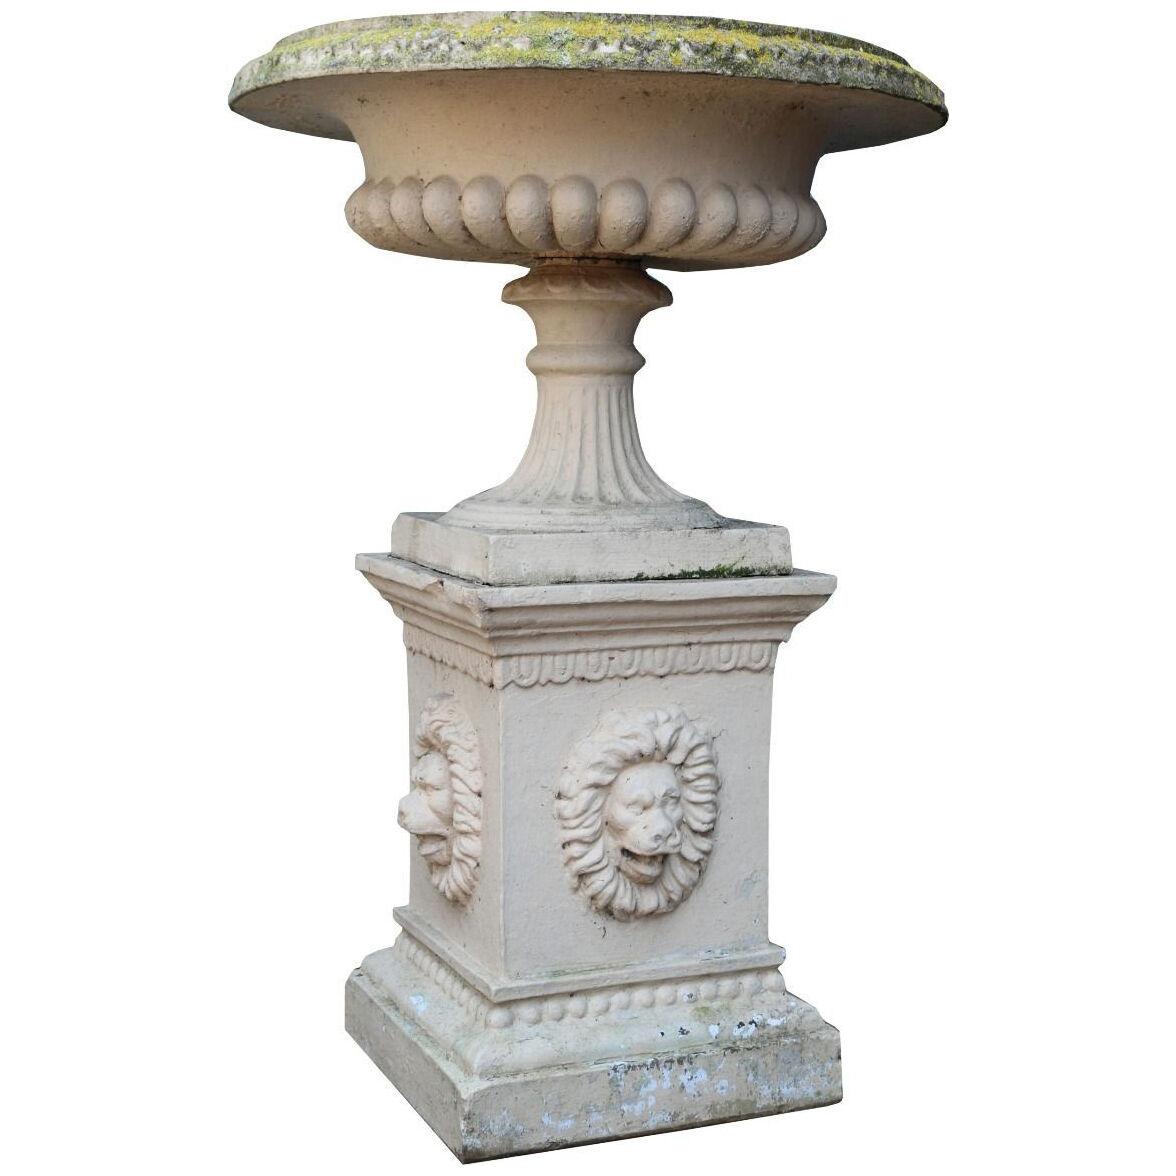 An Antique Buff Terracotta Tazza Urn on Pedestal